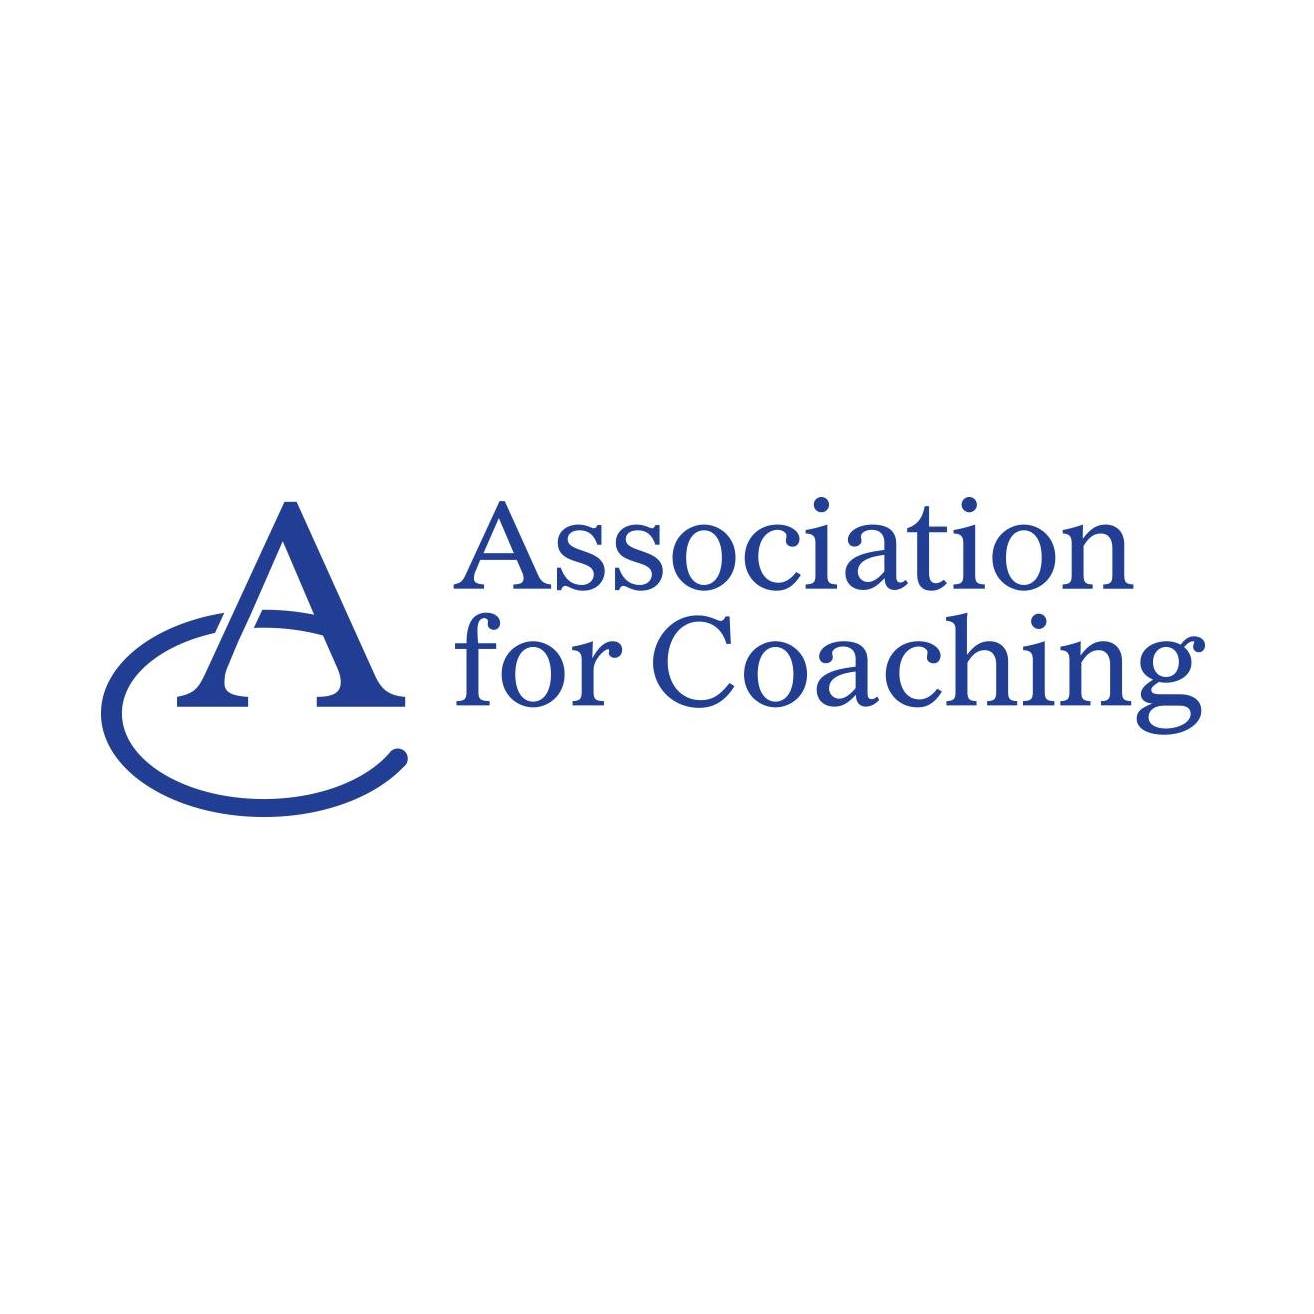 Association for coaching badge logo